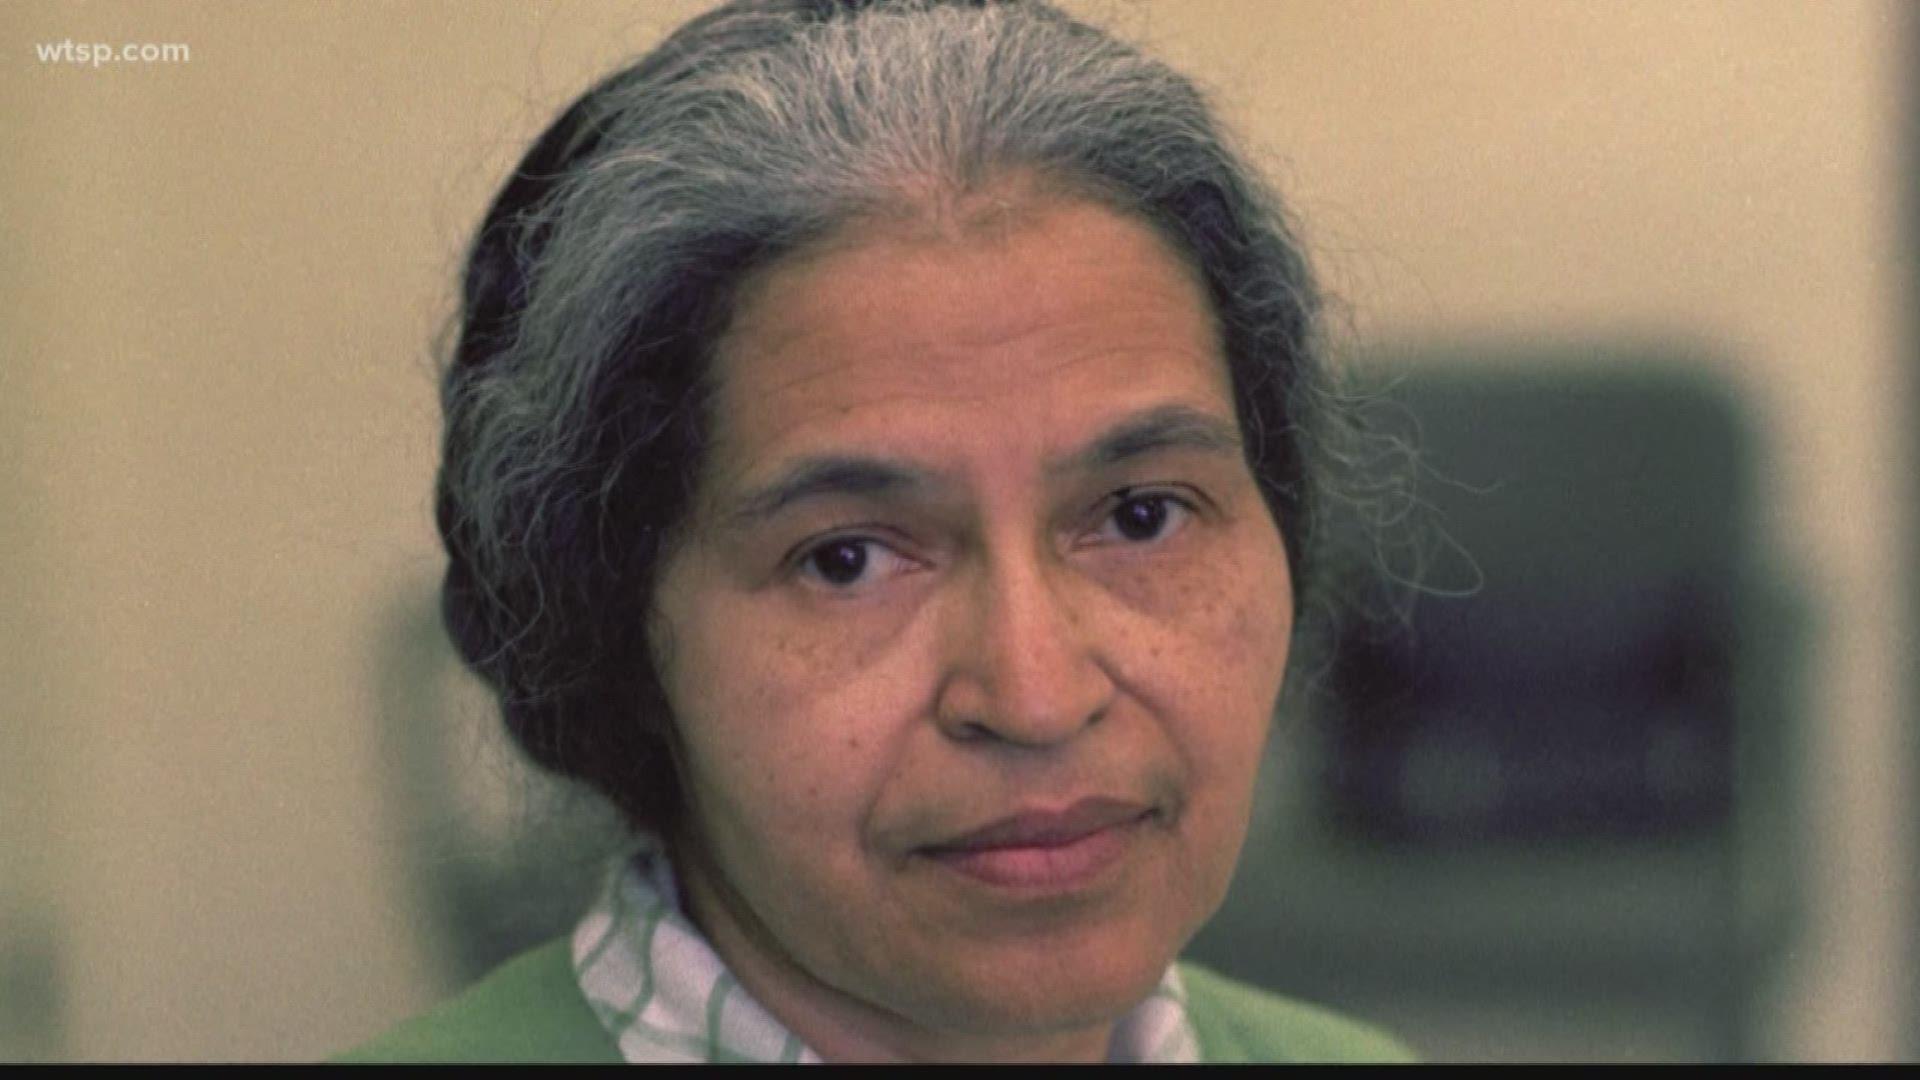 Tuesday marks Rosa Parks 107th birthday.